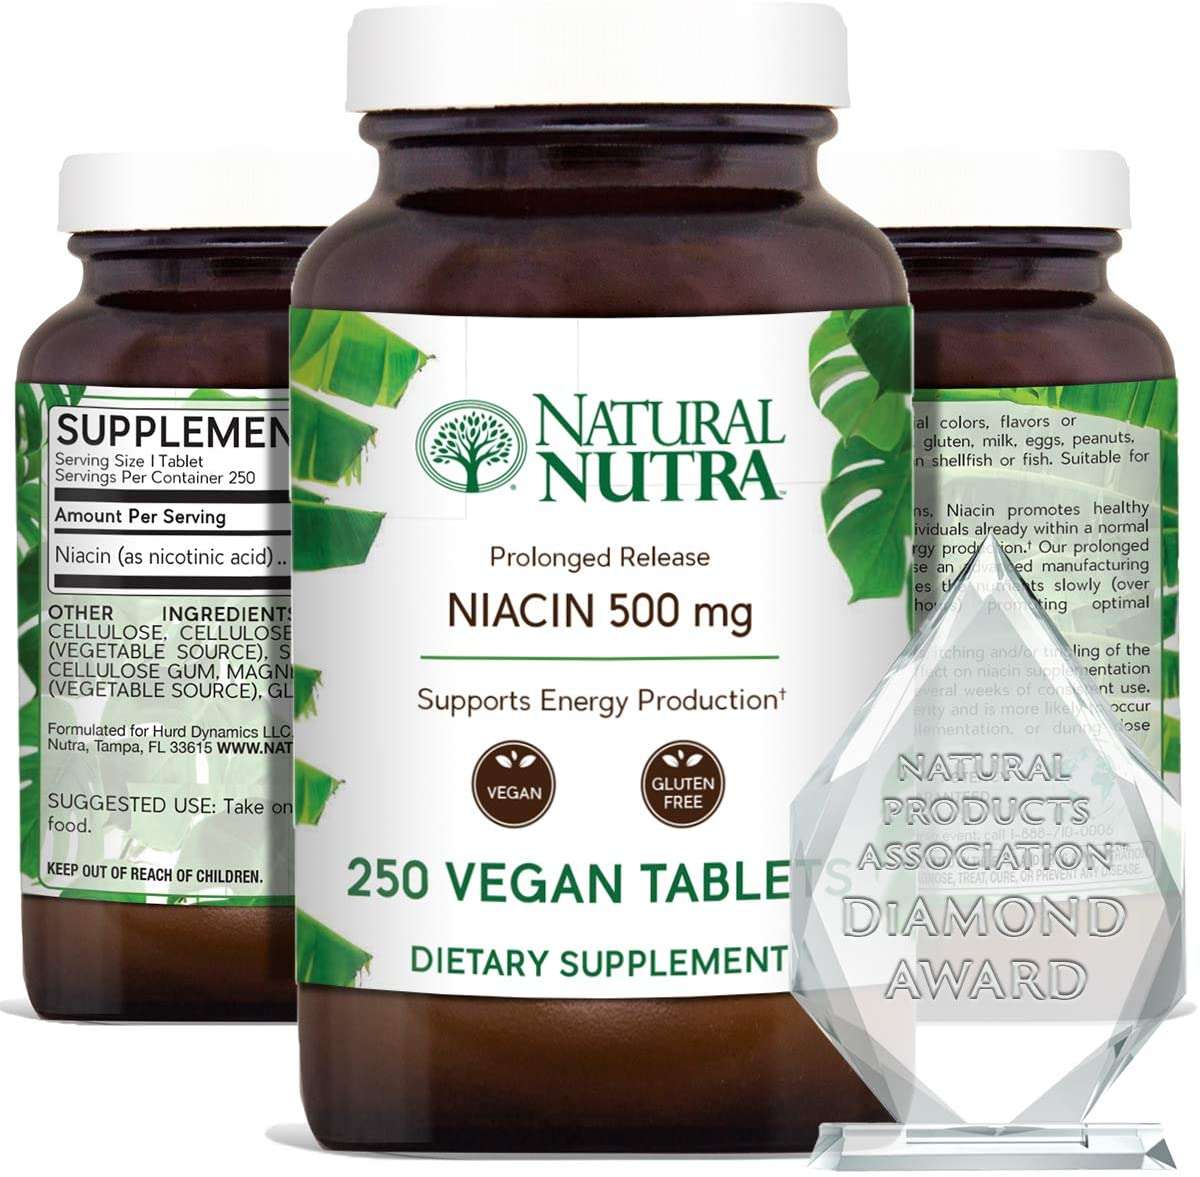 Best Niacin Supplement for Cholesterol Lowering 2020